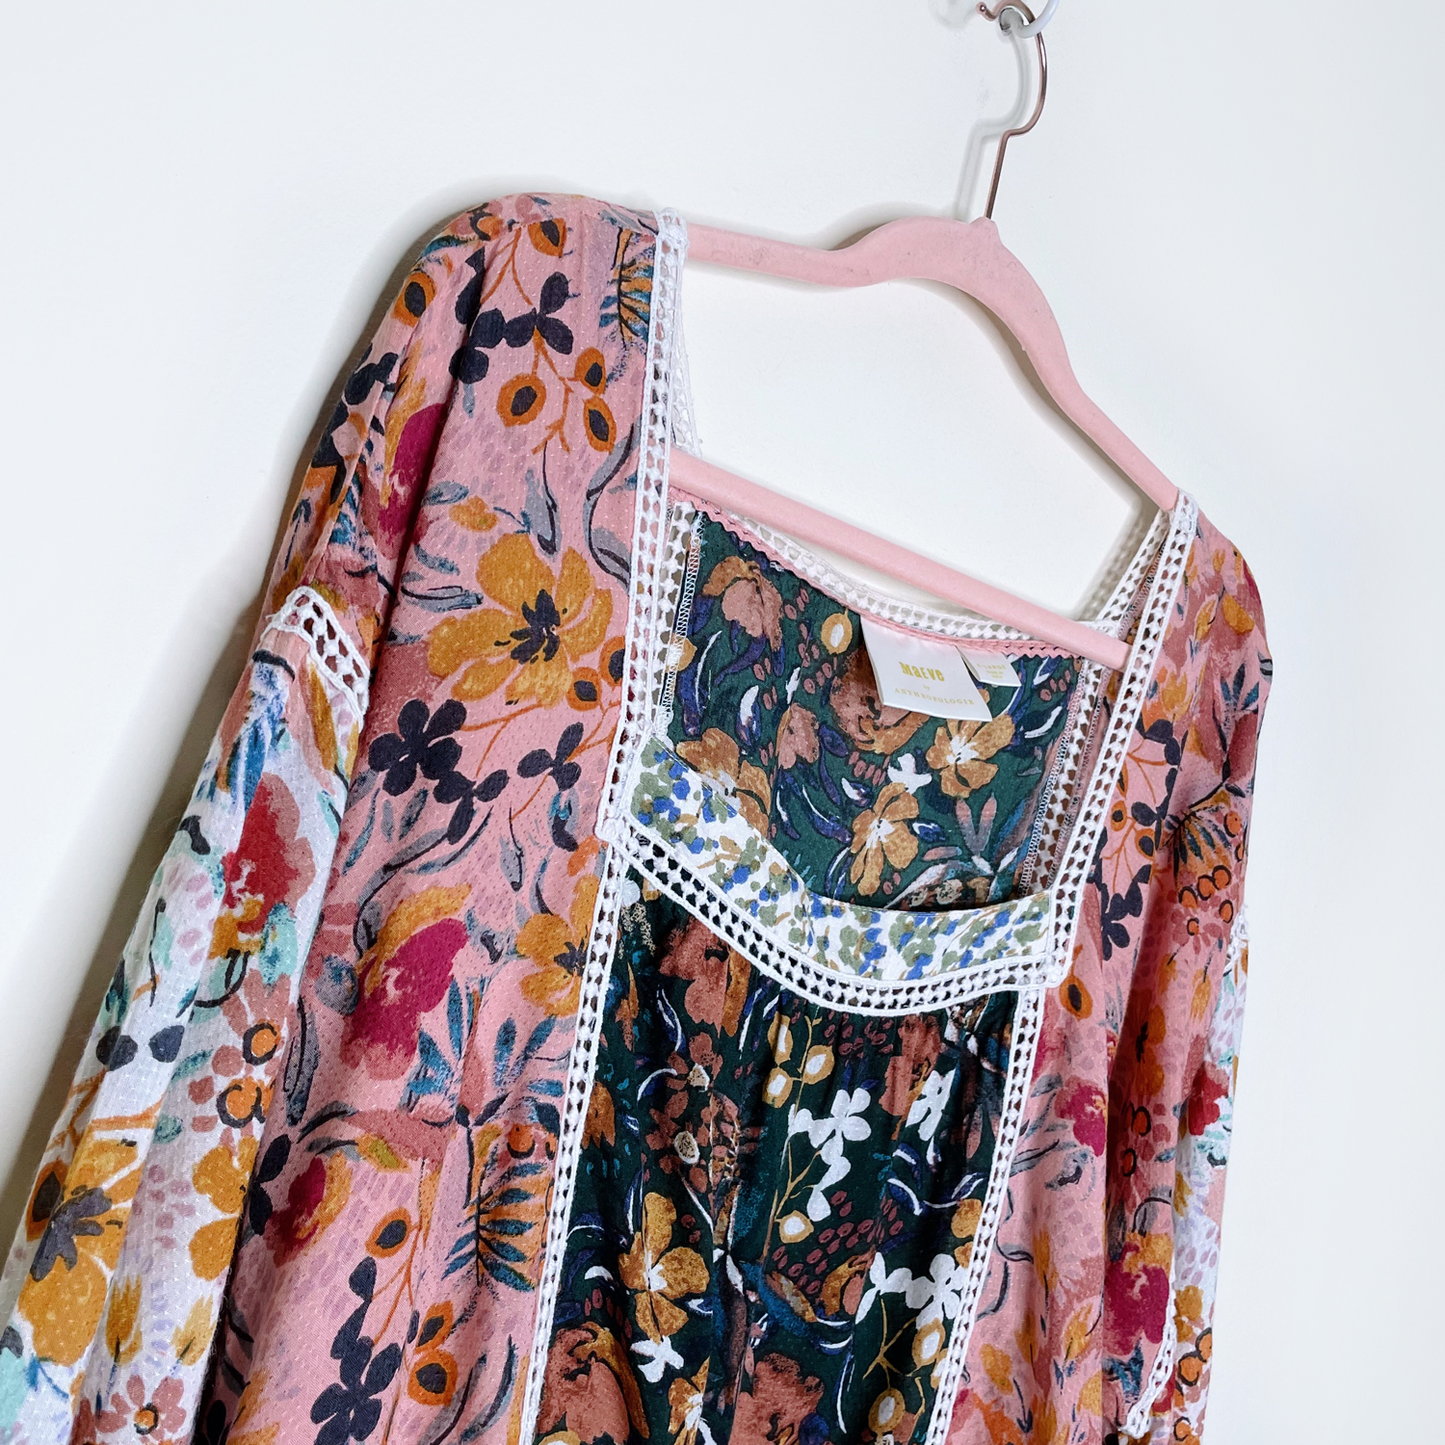 maeve nikki square neck floral crochet boho blouse - size xl